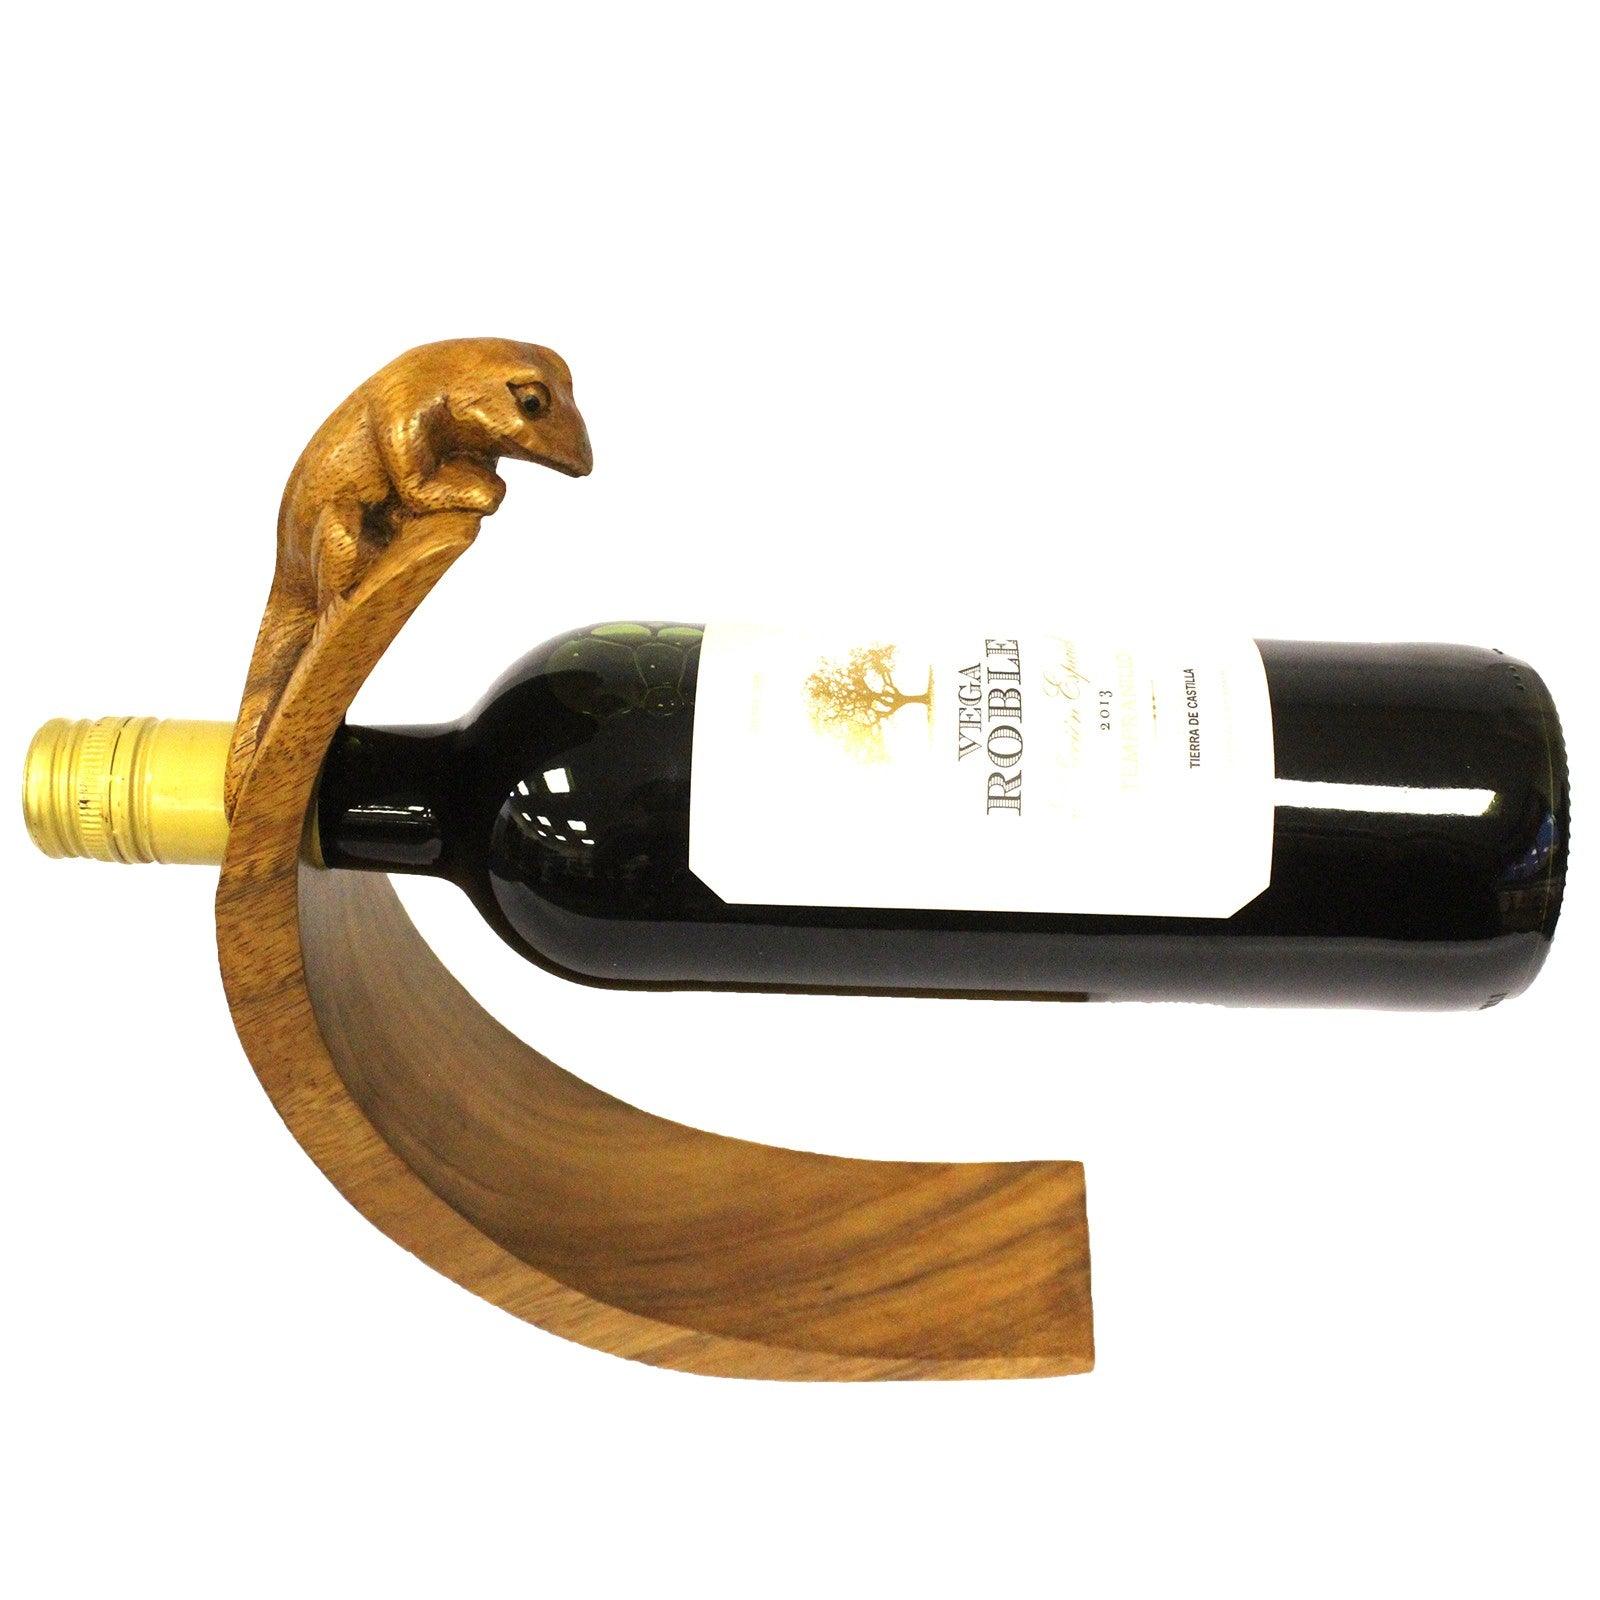 Balance Wine Holders - Gecko - DuvetDay.co.uk